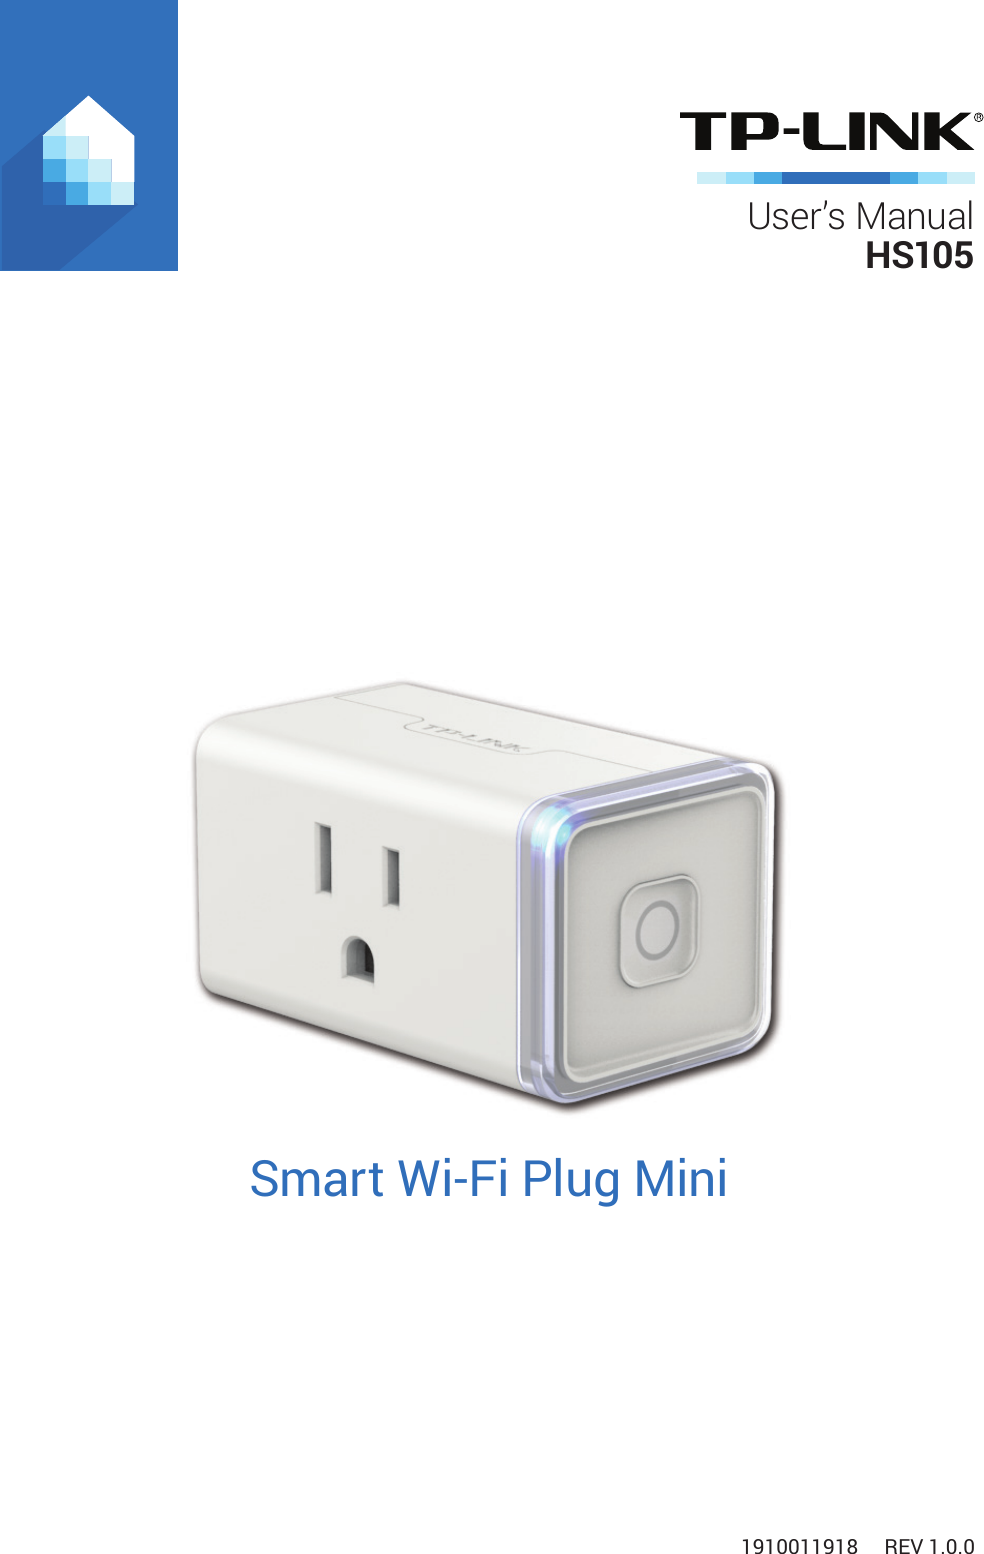 User’s ManualHS1051910011918     REV 1.0.0Smart Wi-Fi Plug Mini